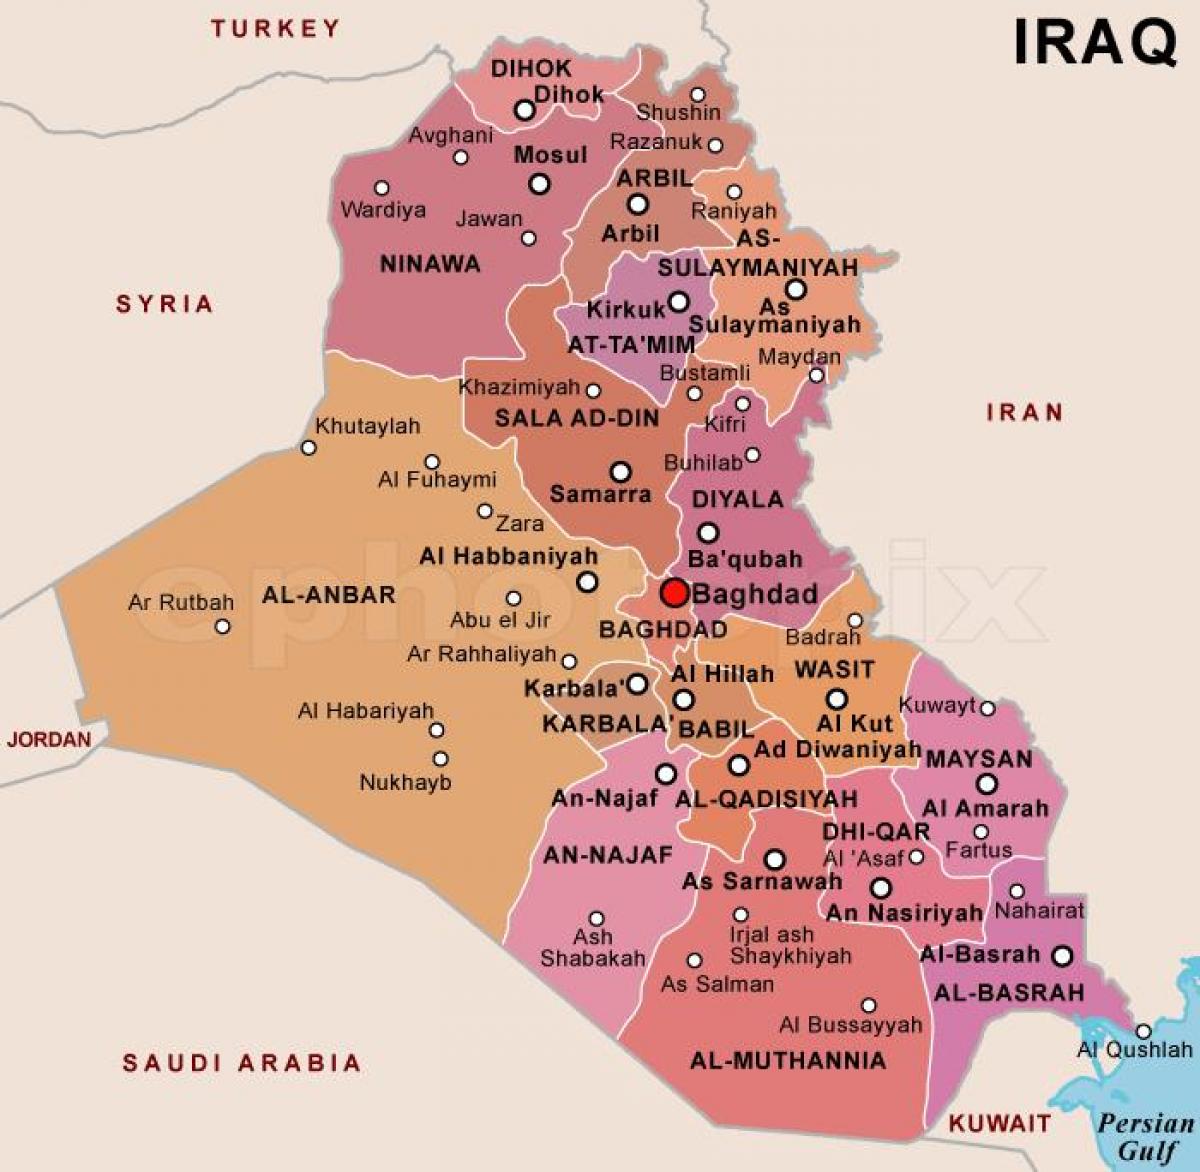 Карта на Ирак држави